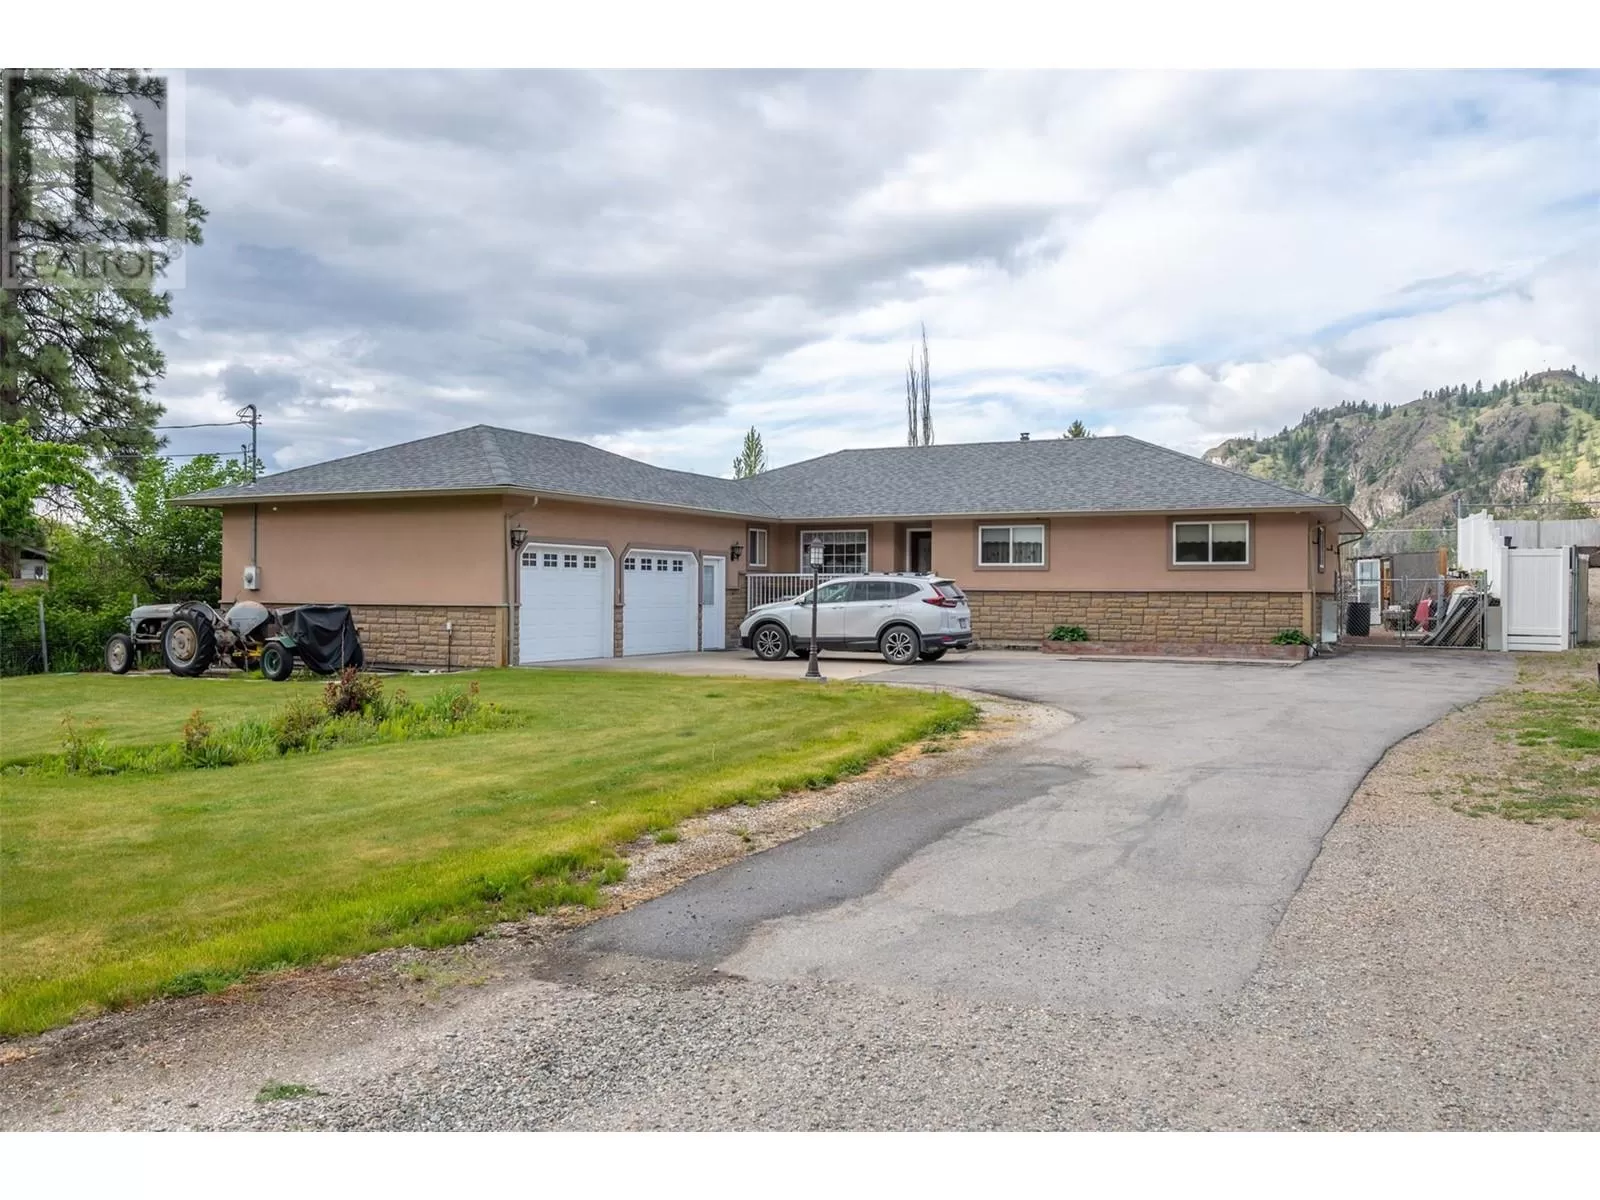 House for rent: 7811 97 Highway, Oliver, British Columbia V0H 1T5